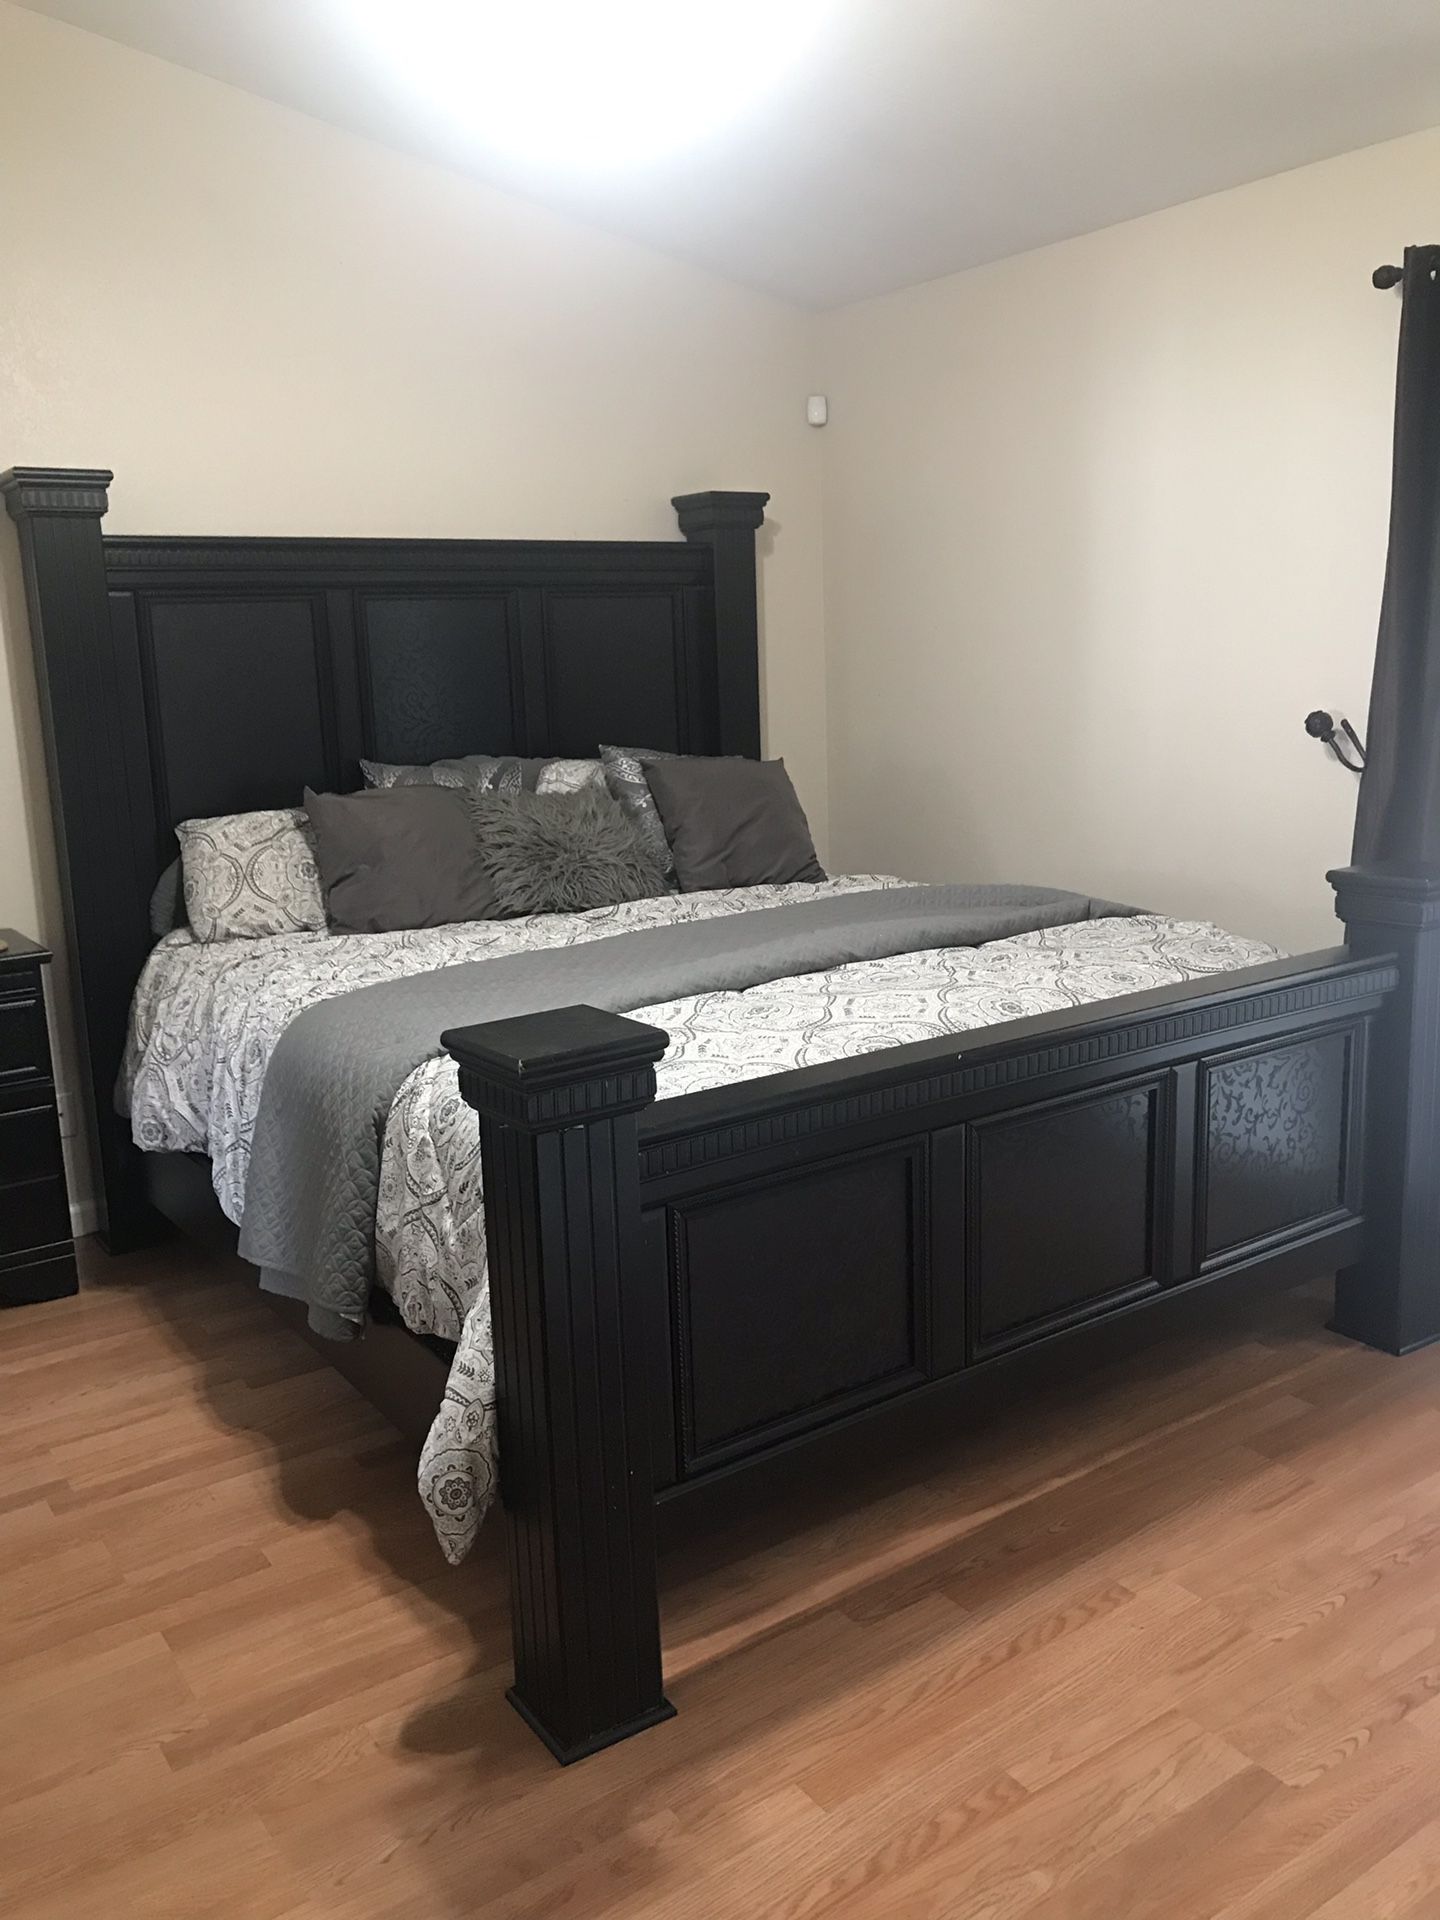 Cal King bedroom set